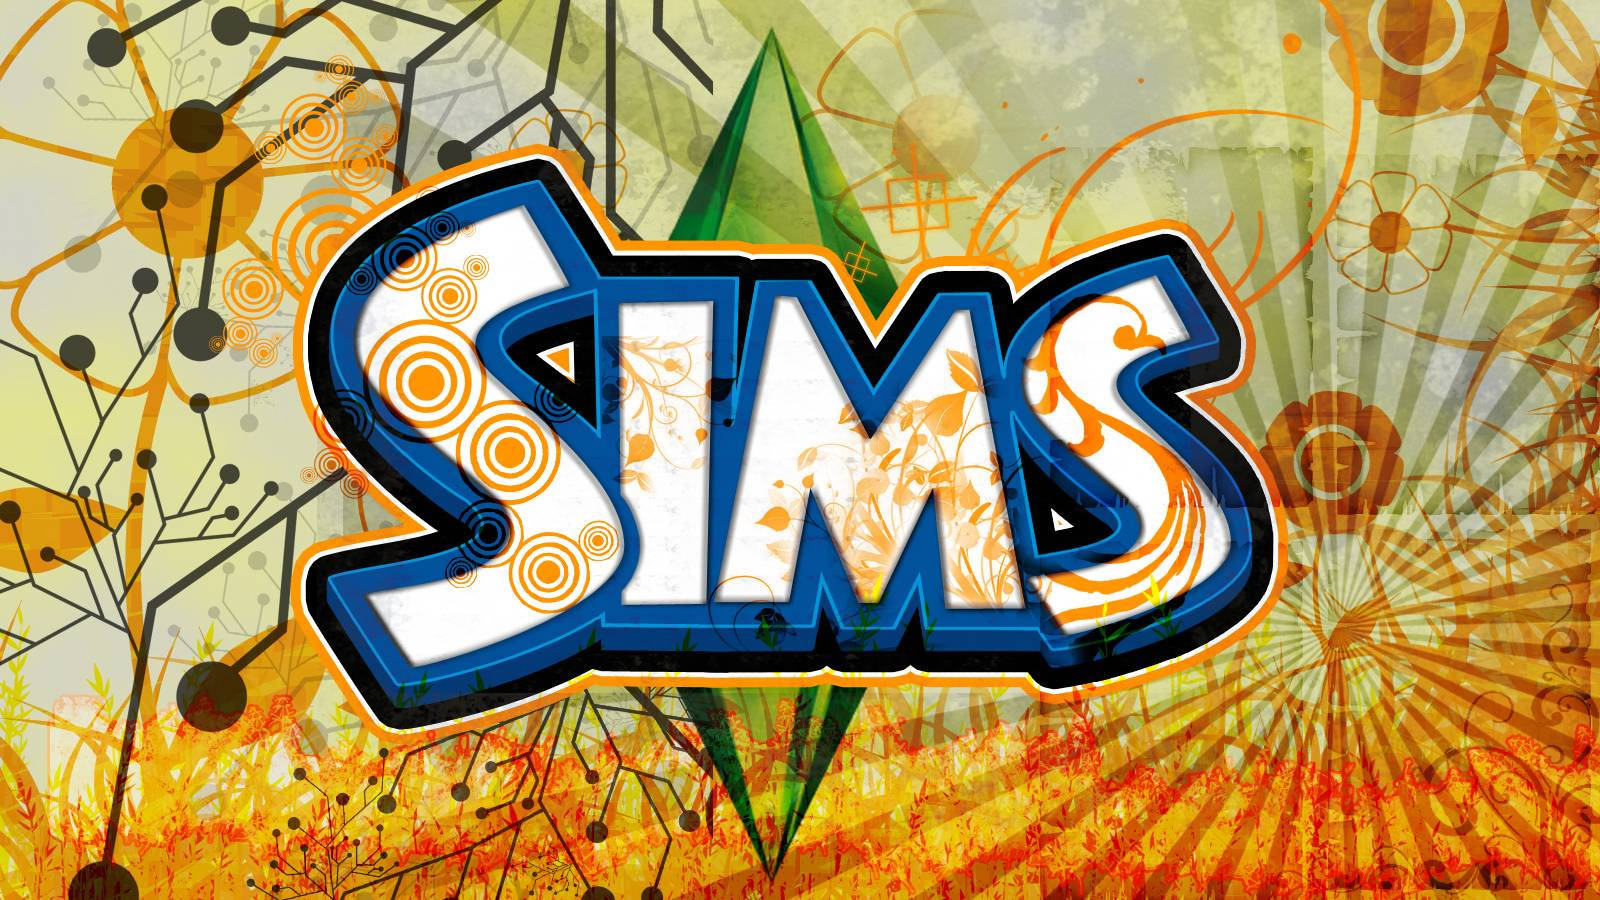 sims 4 wallpaper